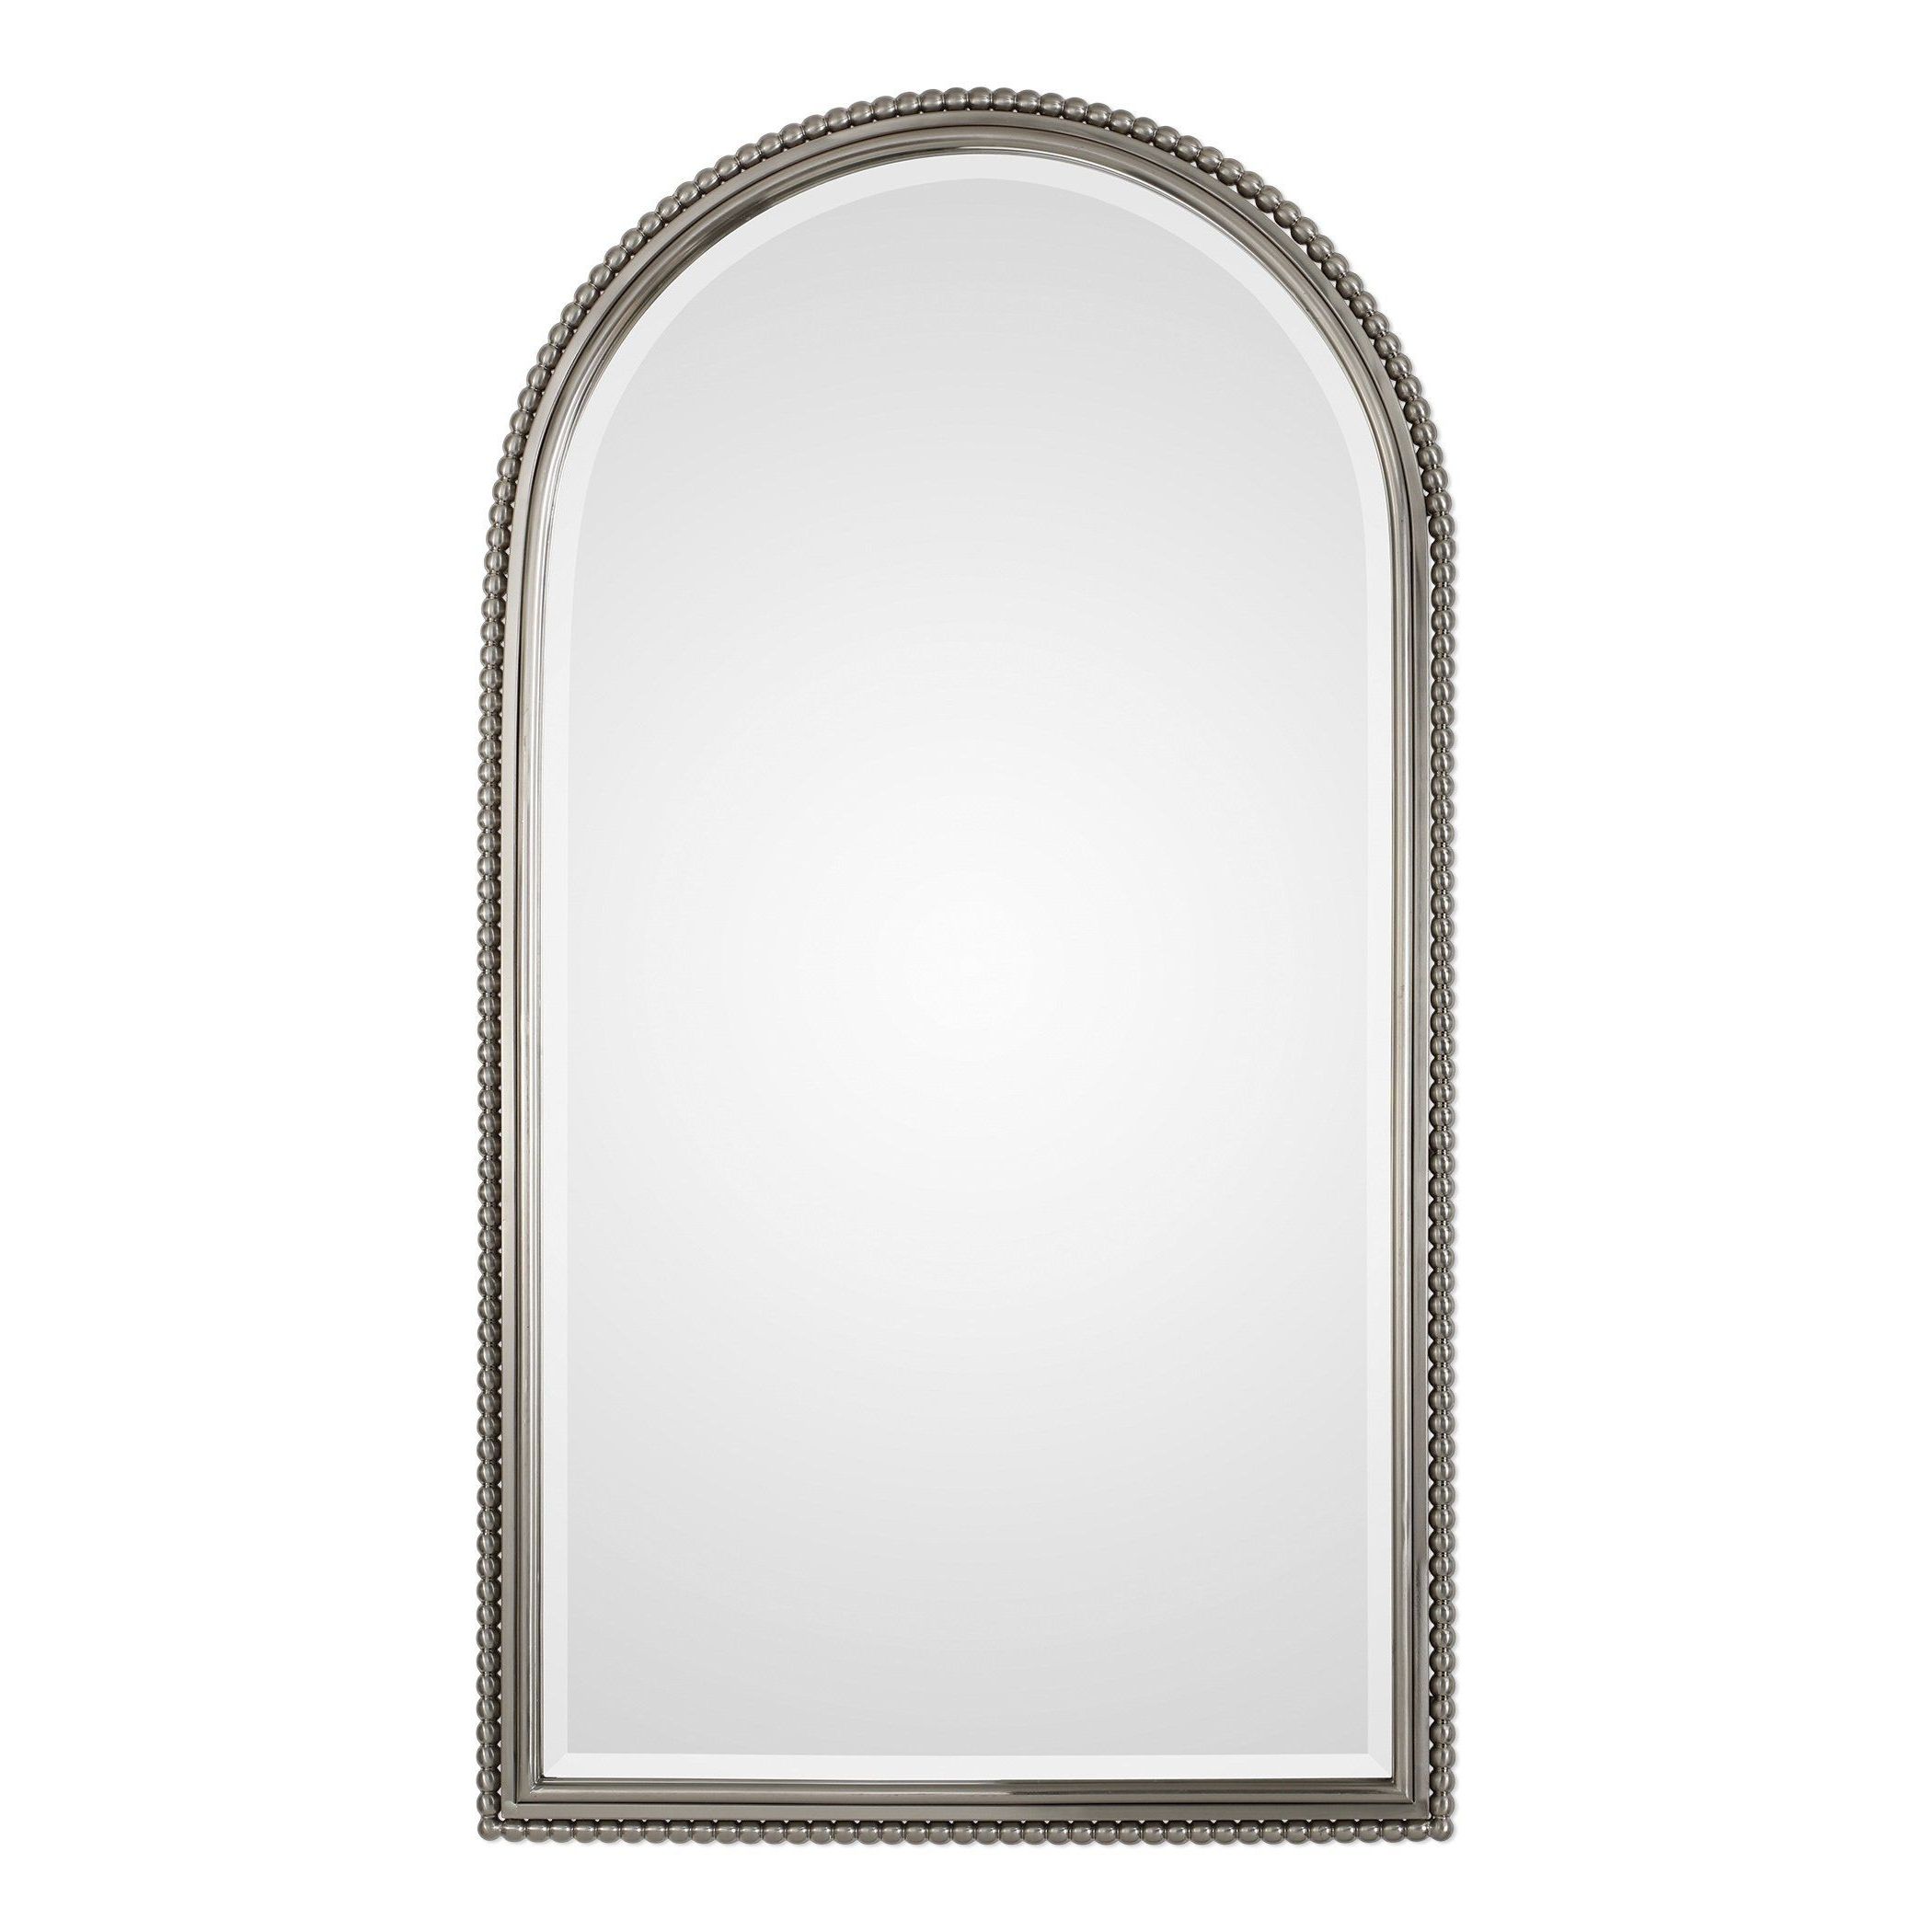 Arch Mirror Regarding Popular Brushed Nickel Octagon Mirrors (View 8 of 15)